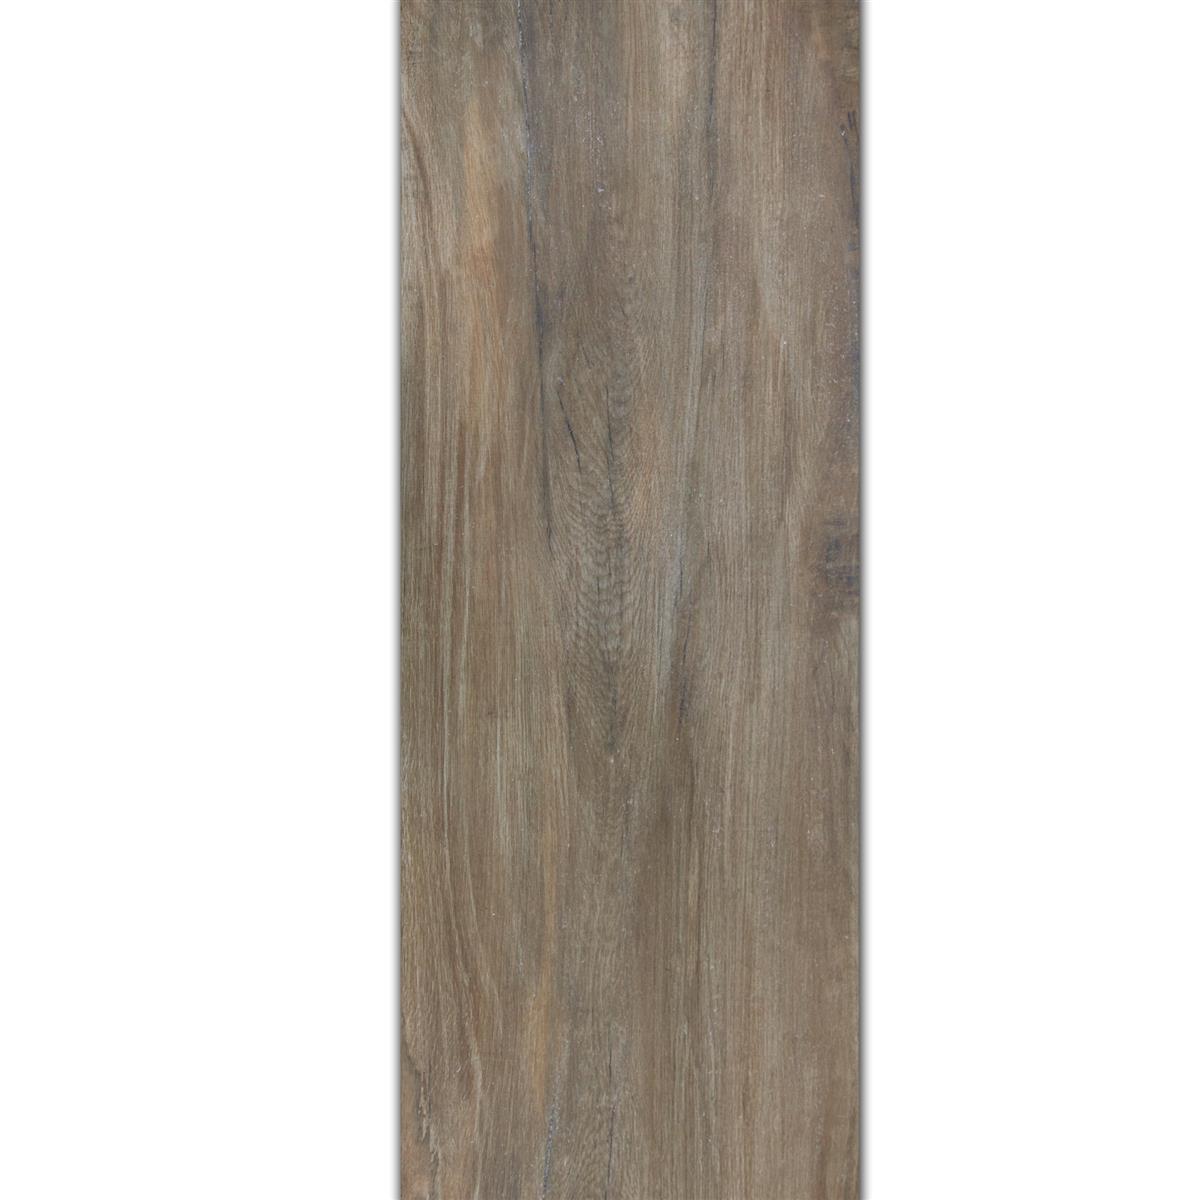 Terrassenplatte Fremont Holzoptik Braun 40x120cm